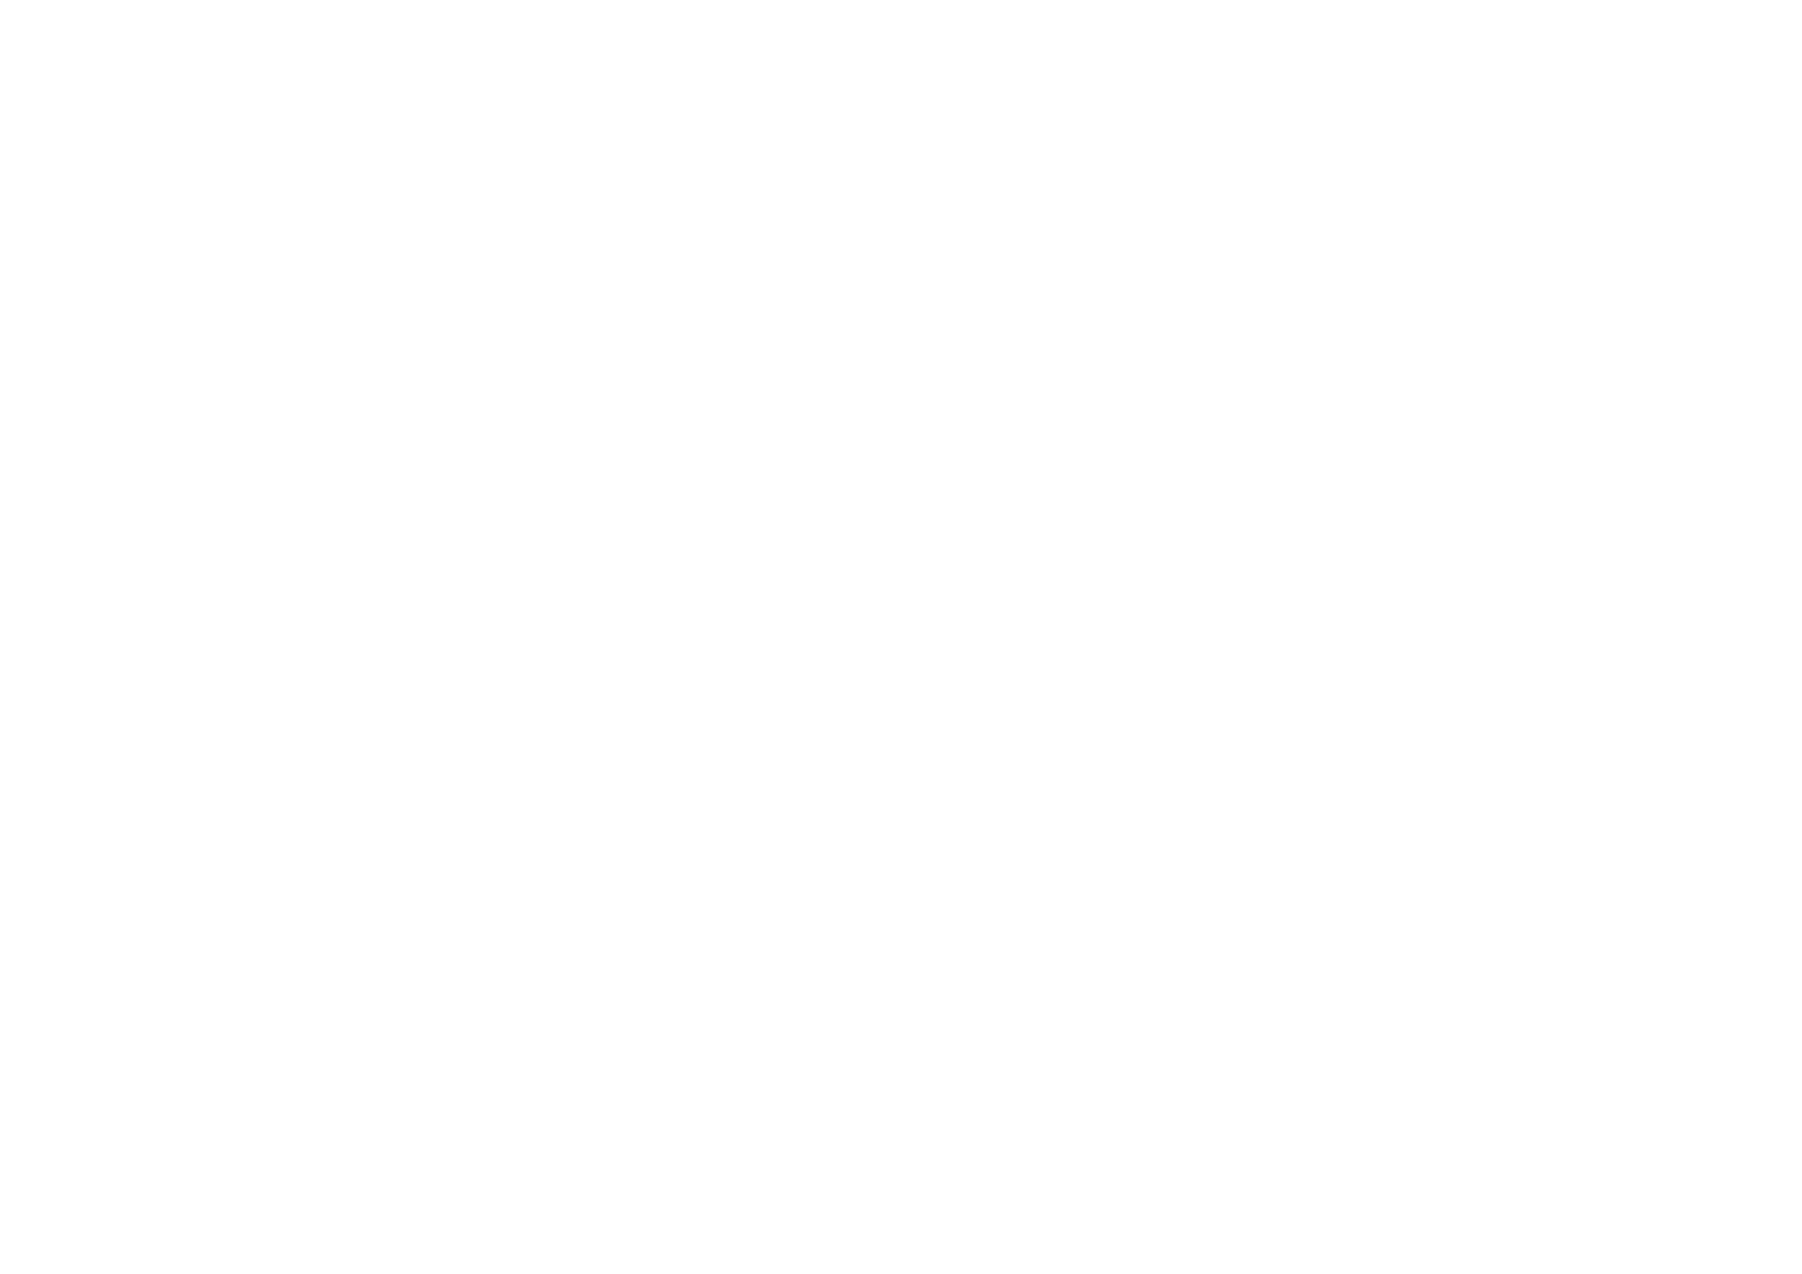 The Strange Chores logo